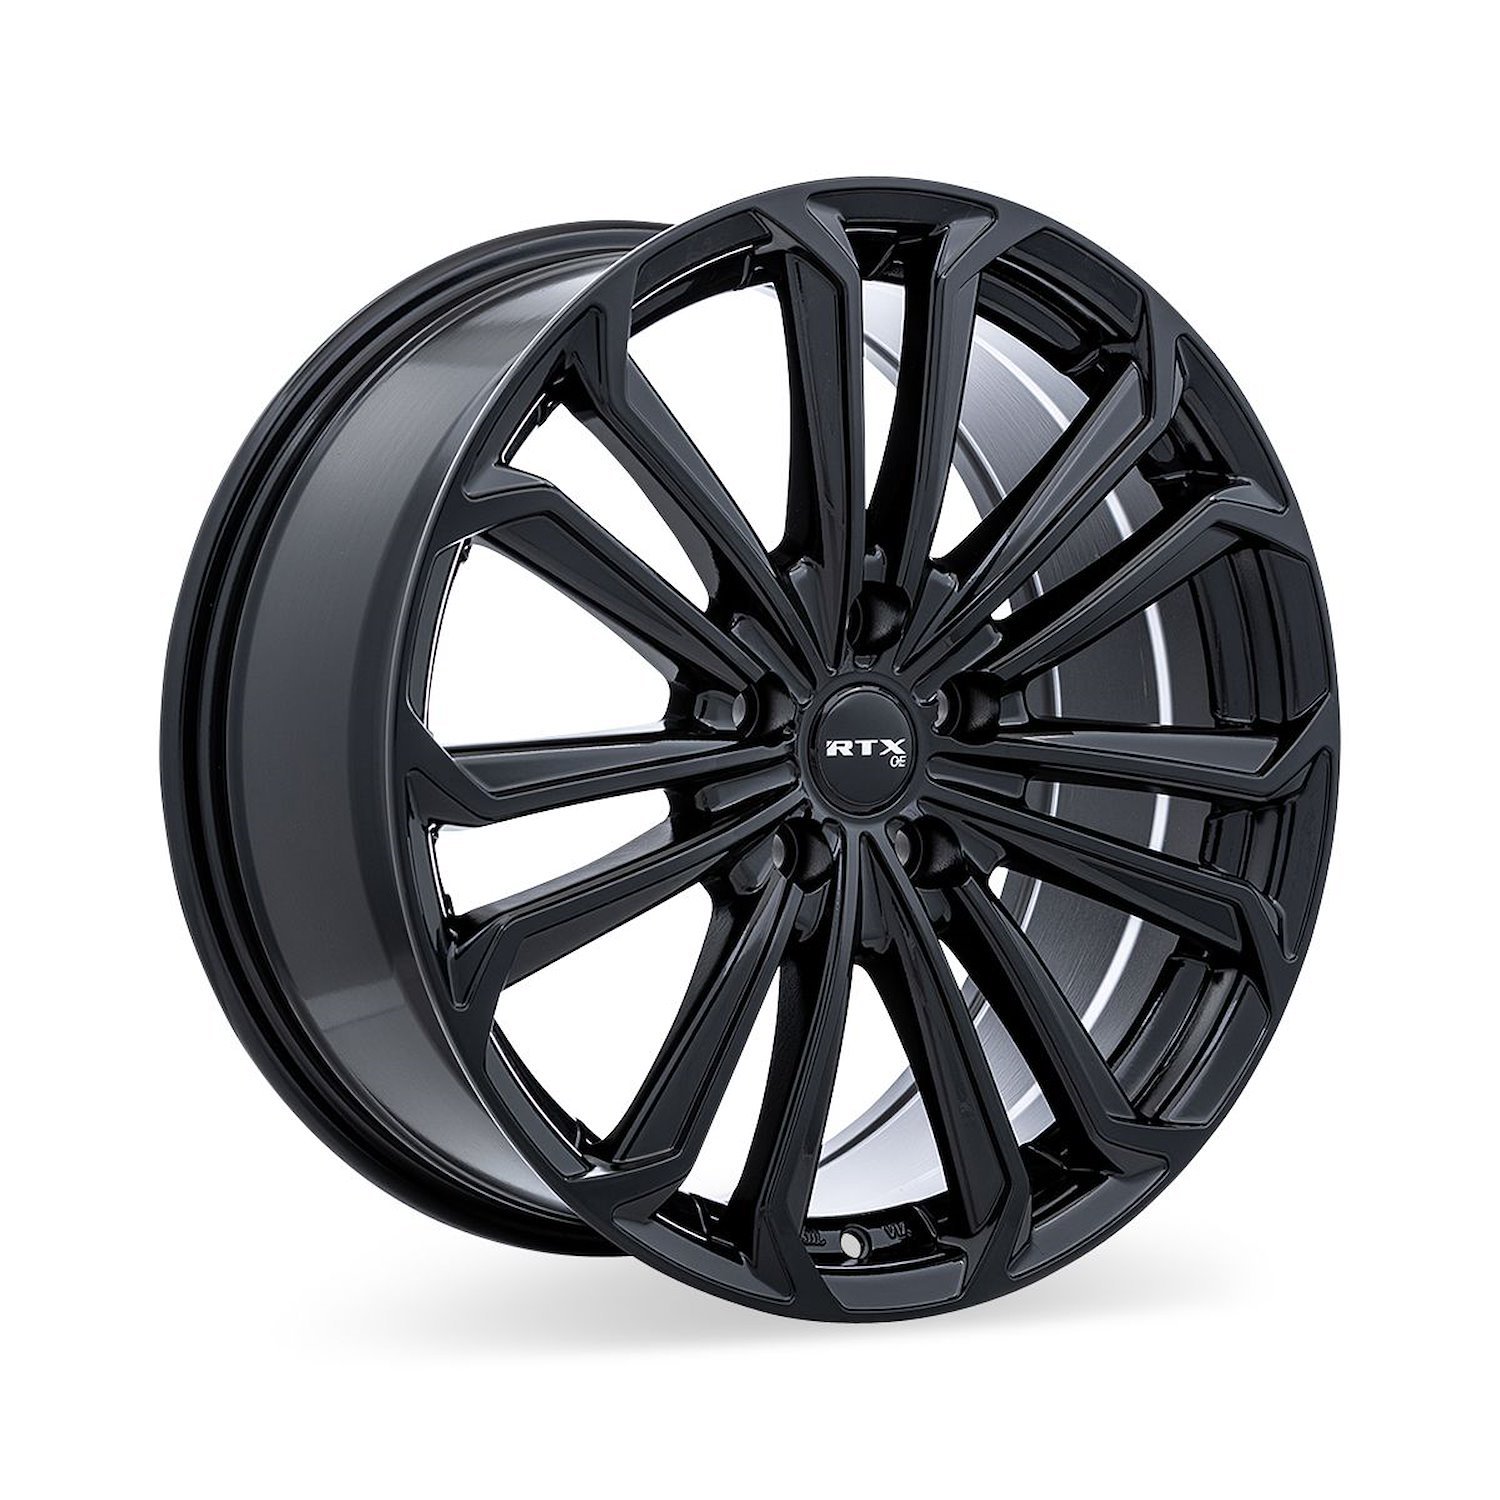 083086 OE-Series Aura Wheel [Size: 16" x 7"] Gloss Black Finish